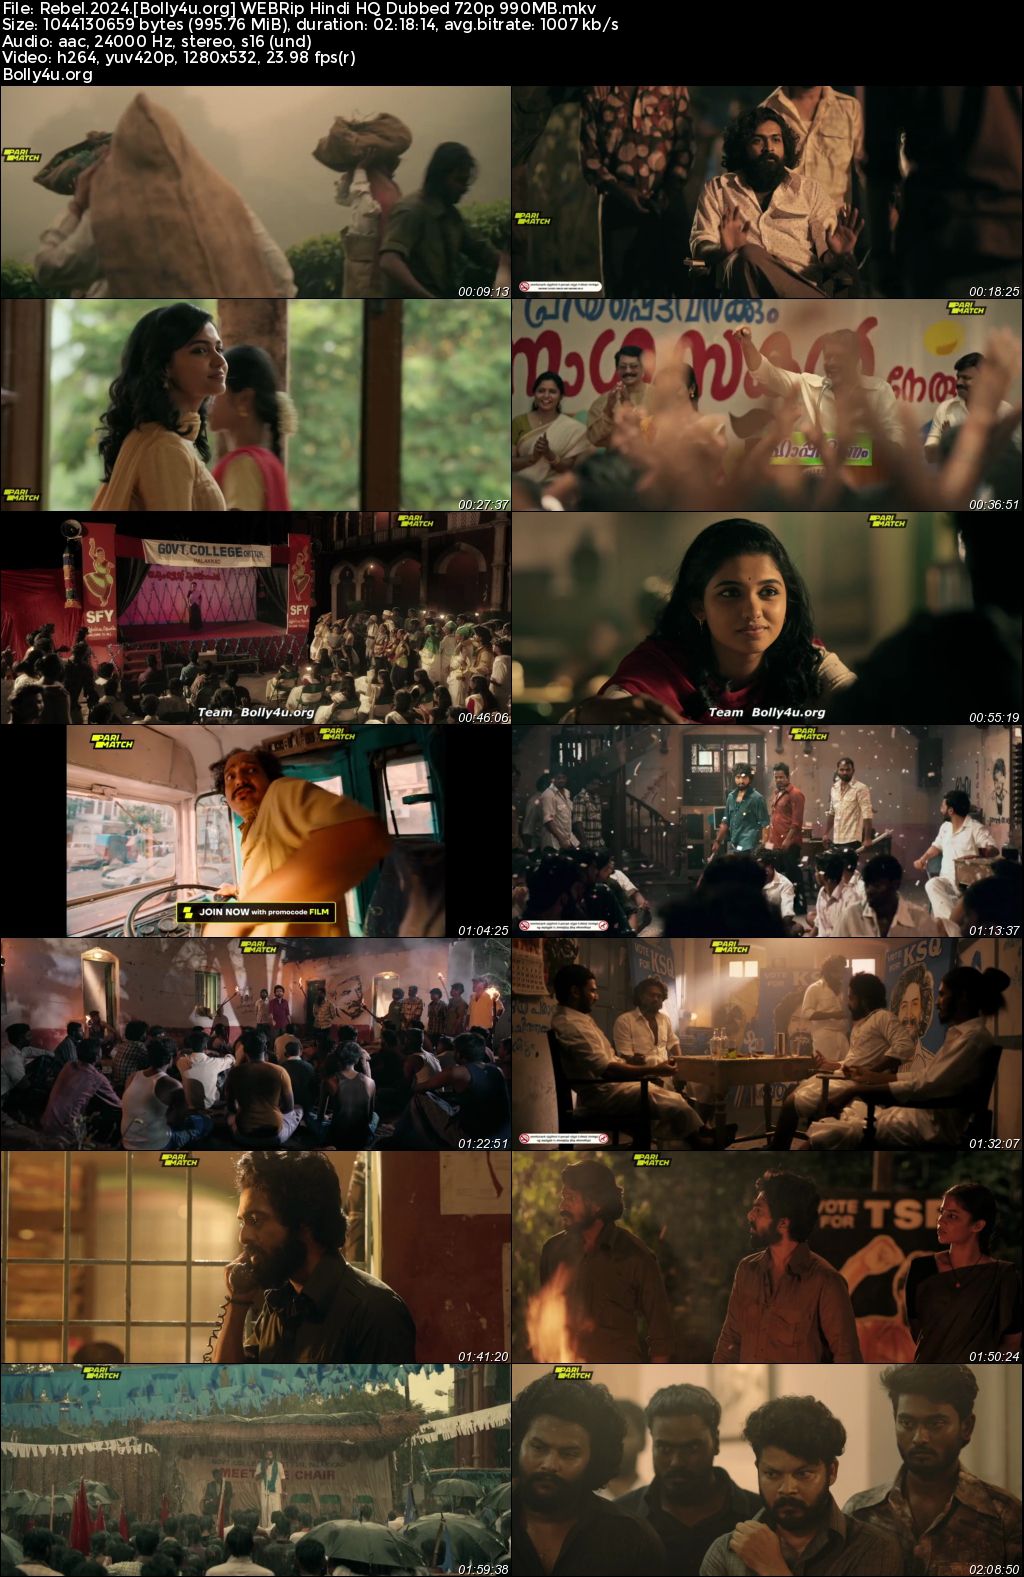 Rebel 2024 WEBRip Hindi HQ Dubbed Full Movie Download 1080p 720p 480p